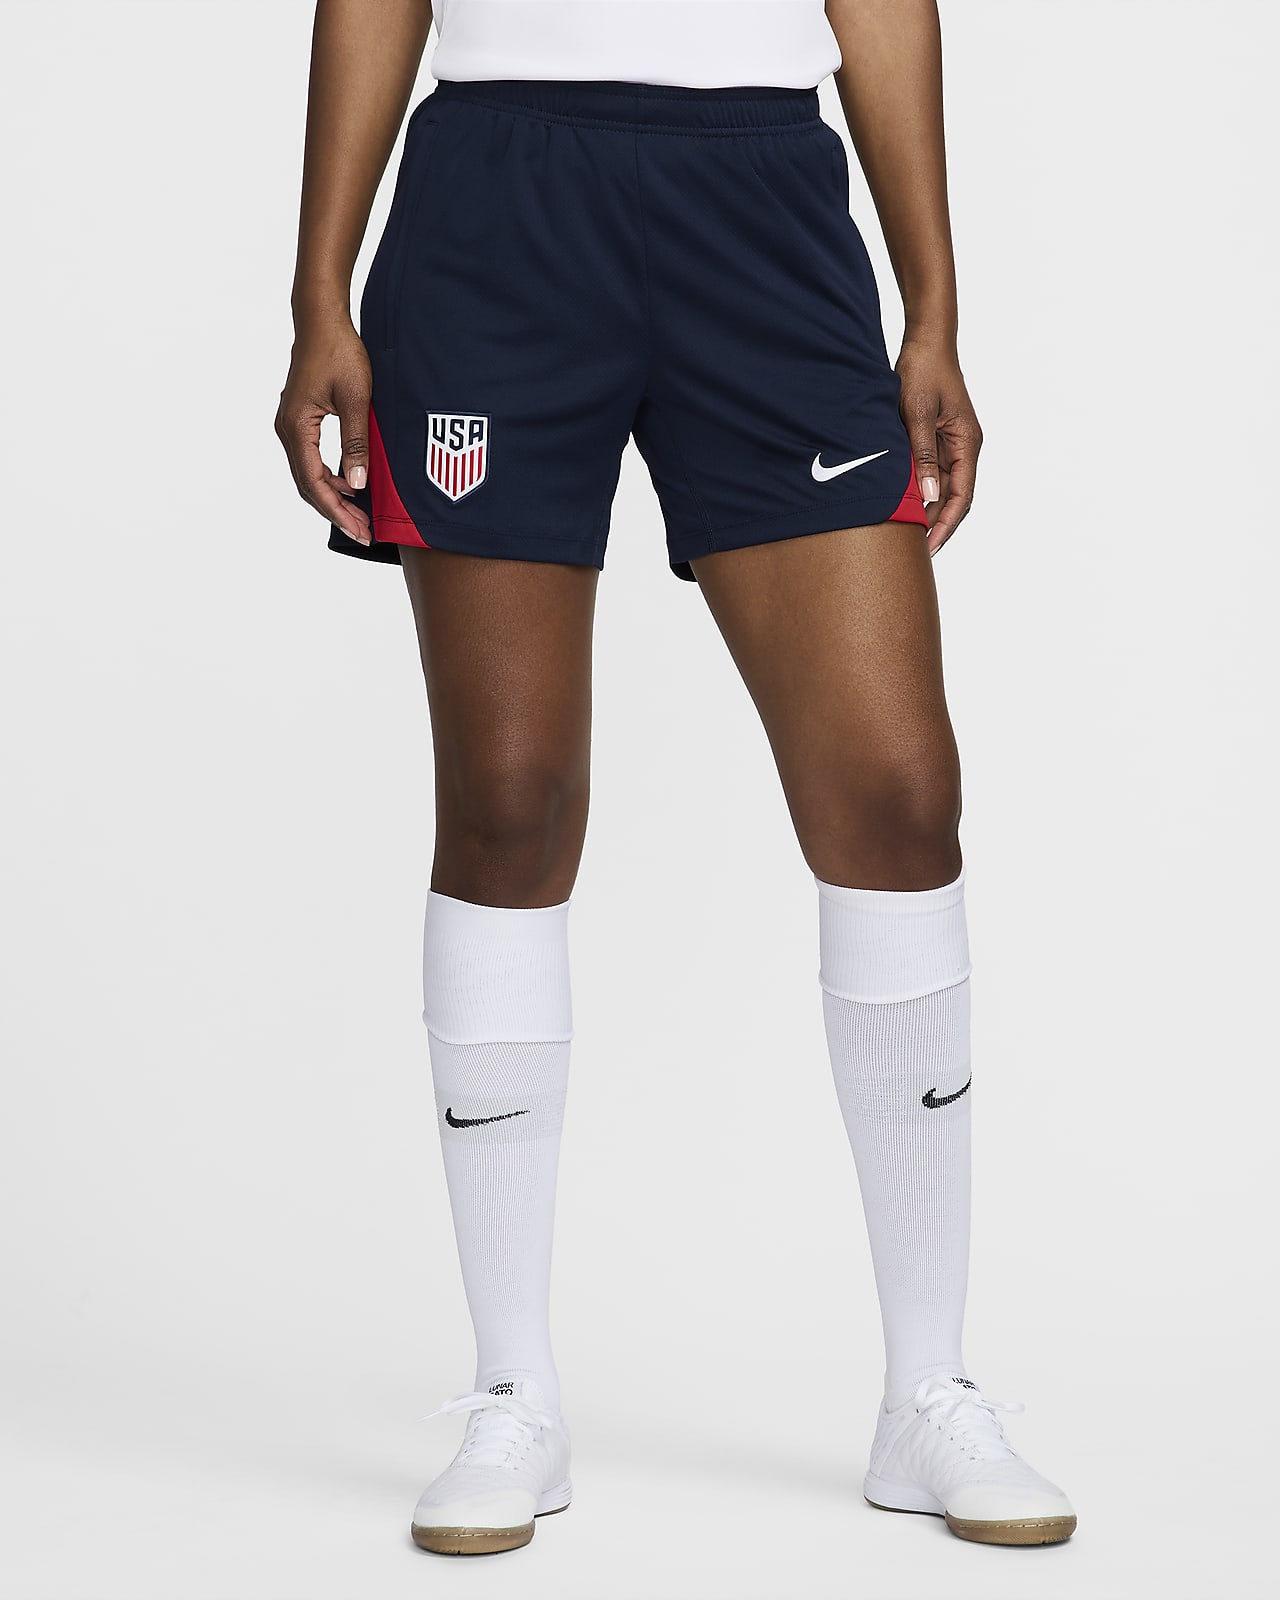 USMNT Strike Women's Nike Dri-FIT Soccer Knit Shorts